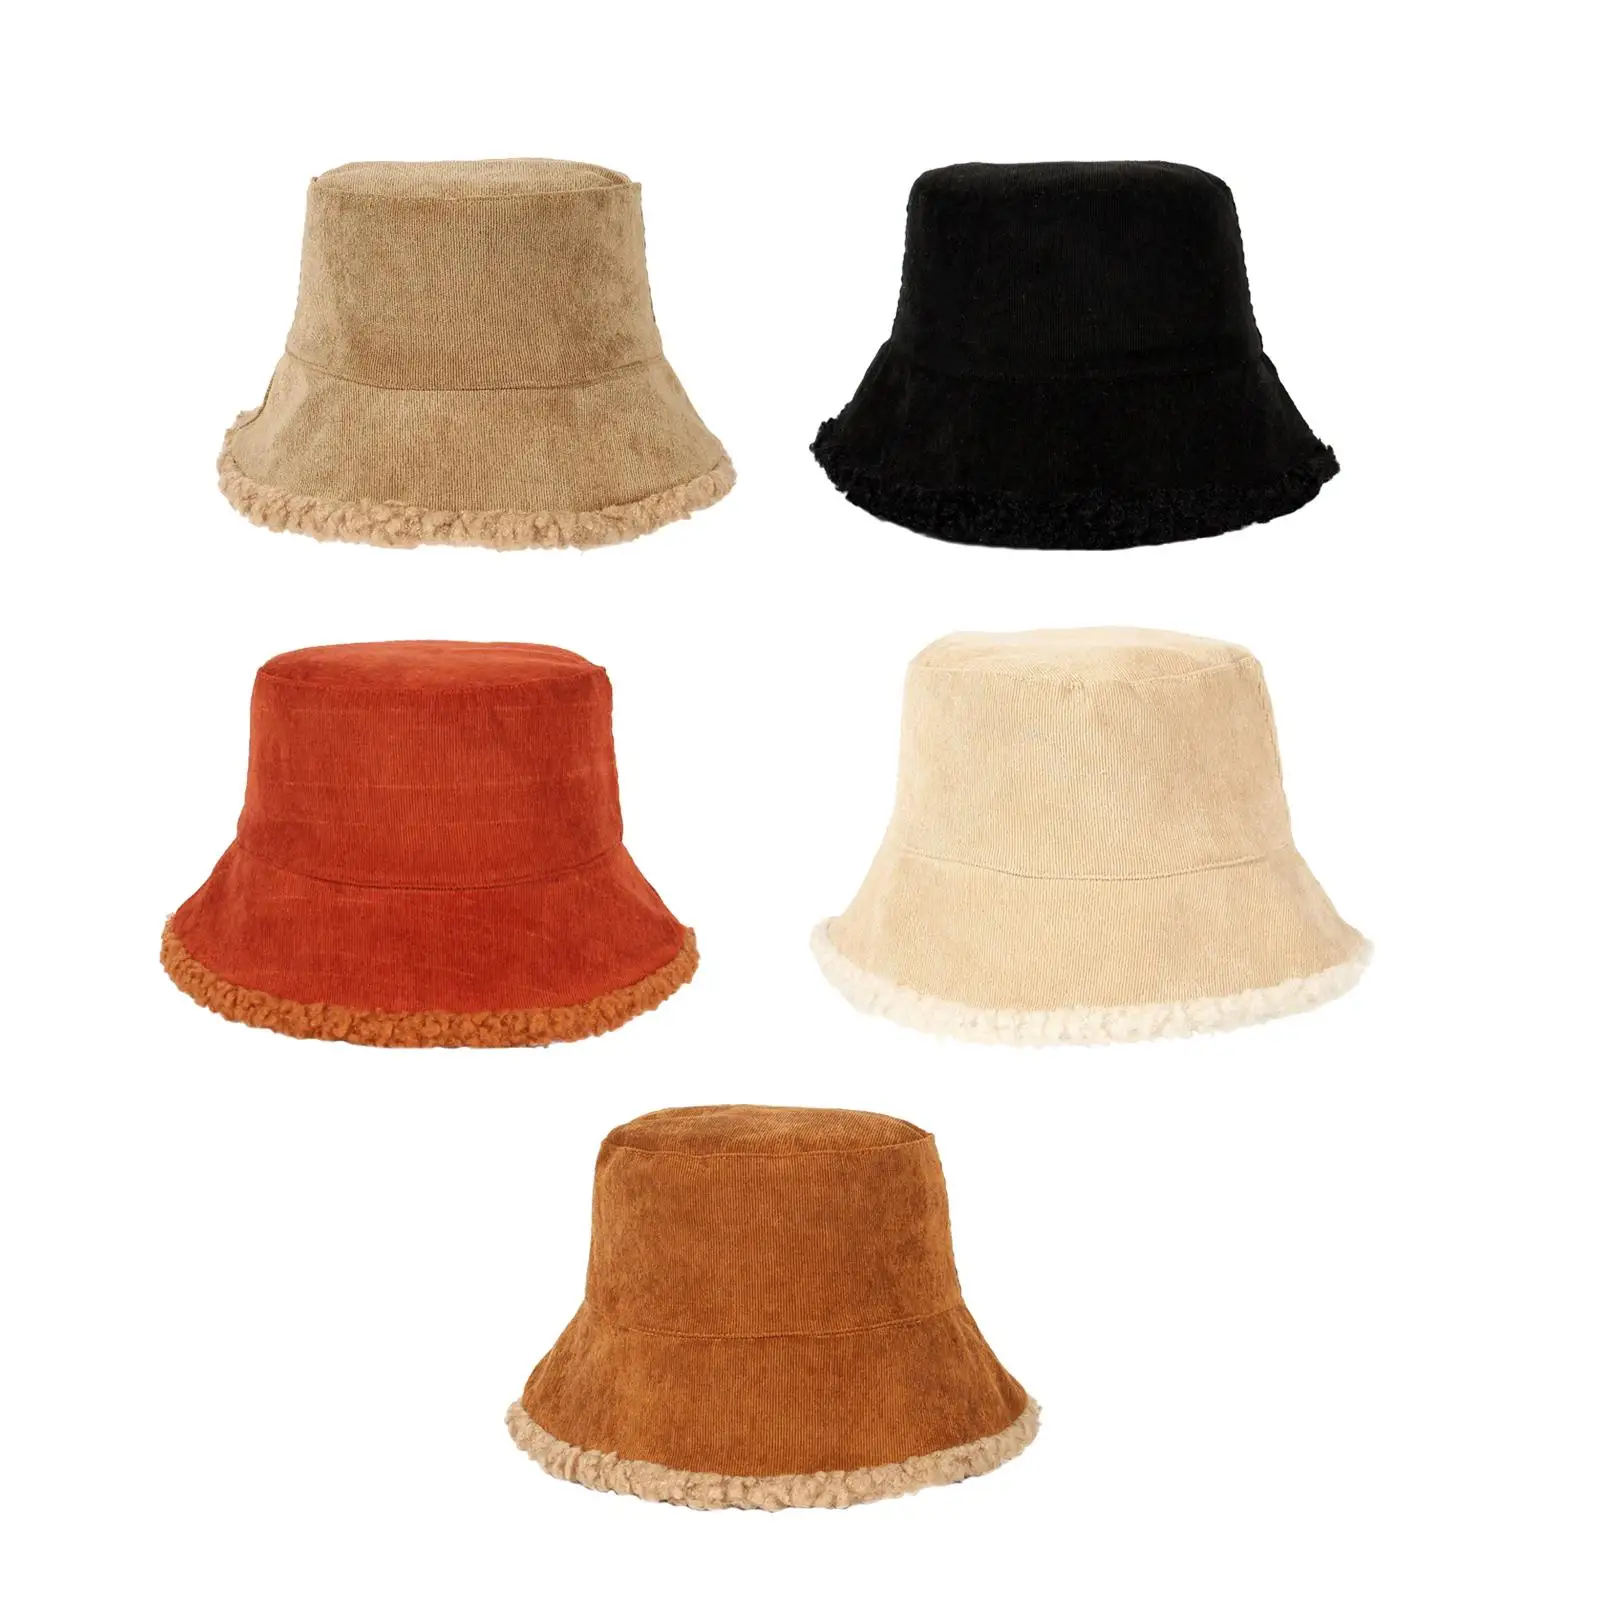 Unique Winter Warm Hat Versatile Comfortable Fisherman Caps Casual Plush Bucket Hat for Ladies Picnic Festivals Hiking Street